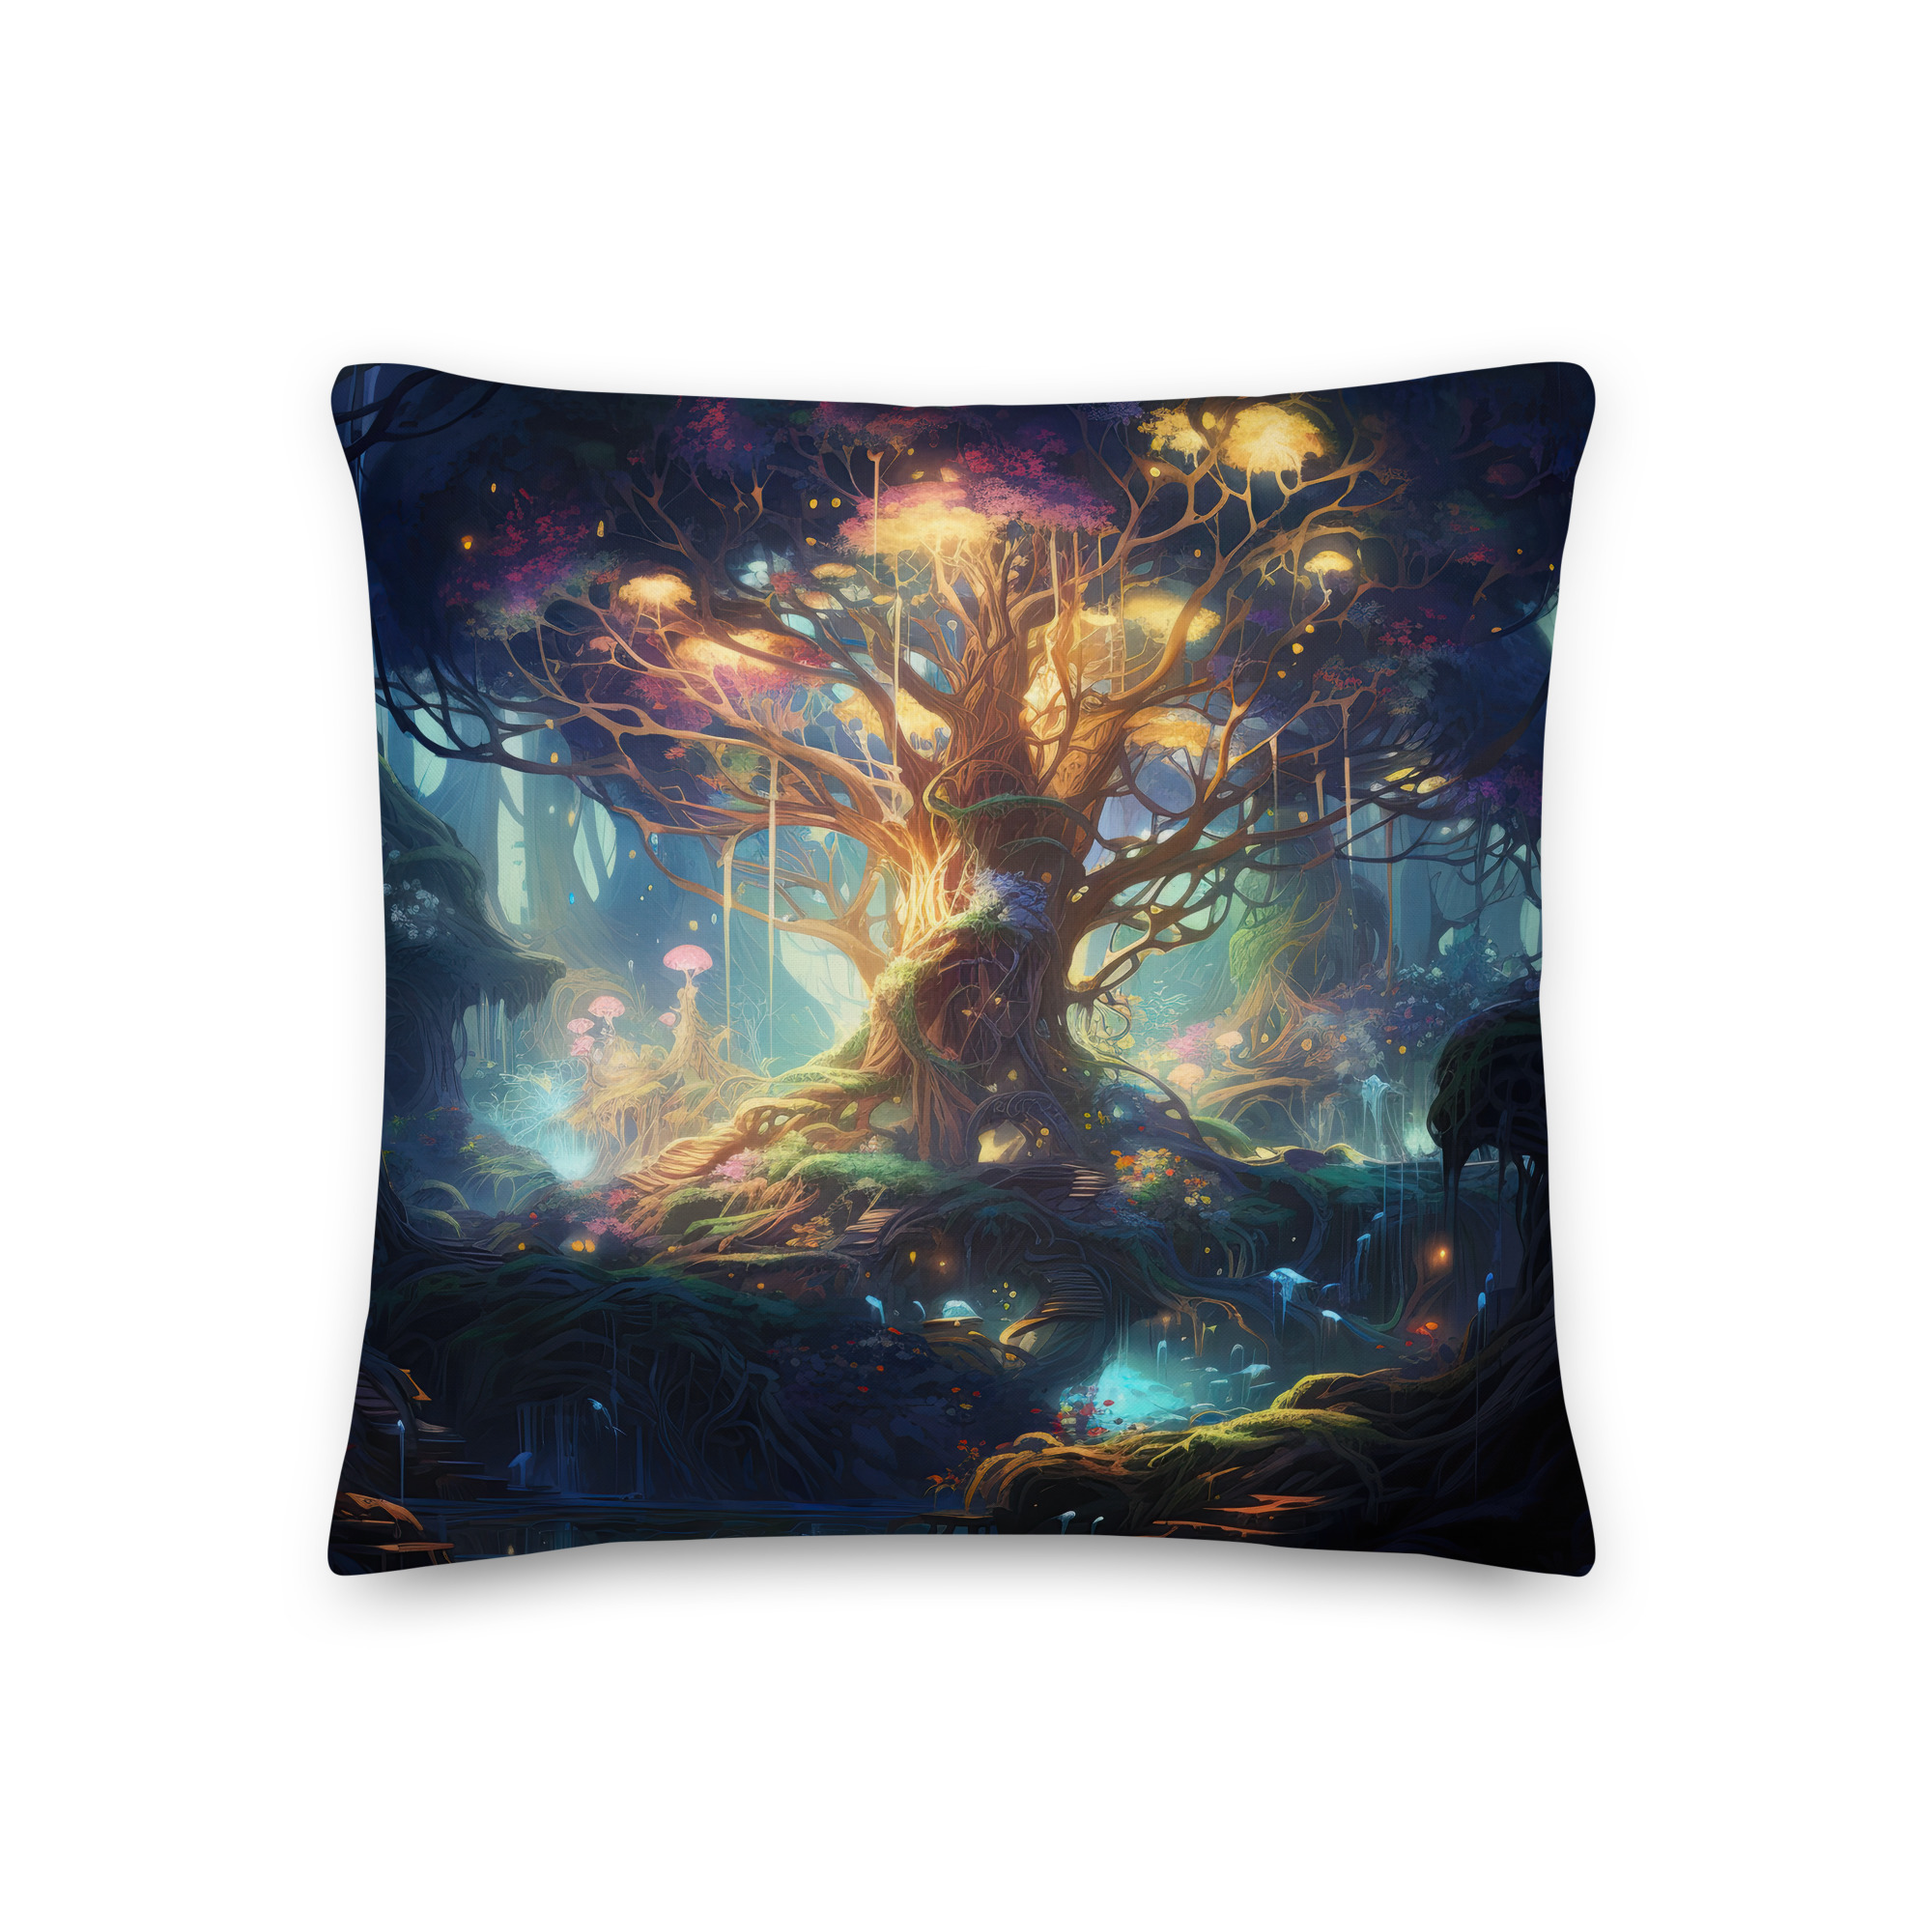 Magical Tree Kingdom Throw Pillow - 18×18